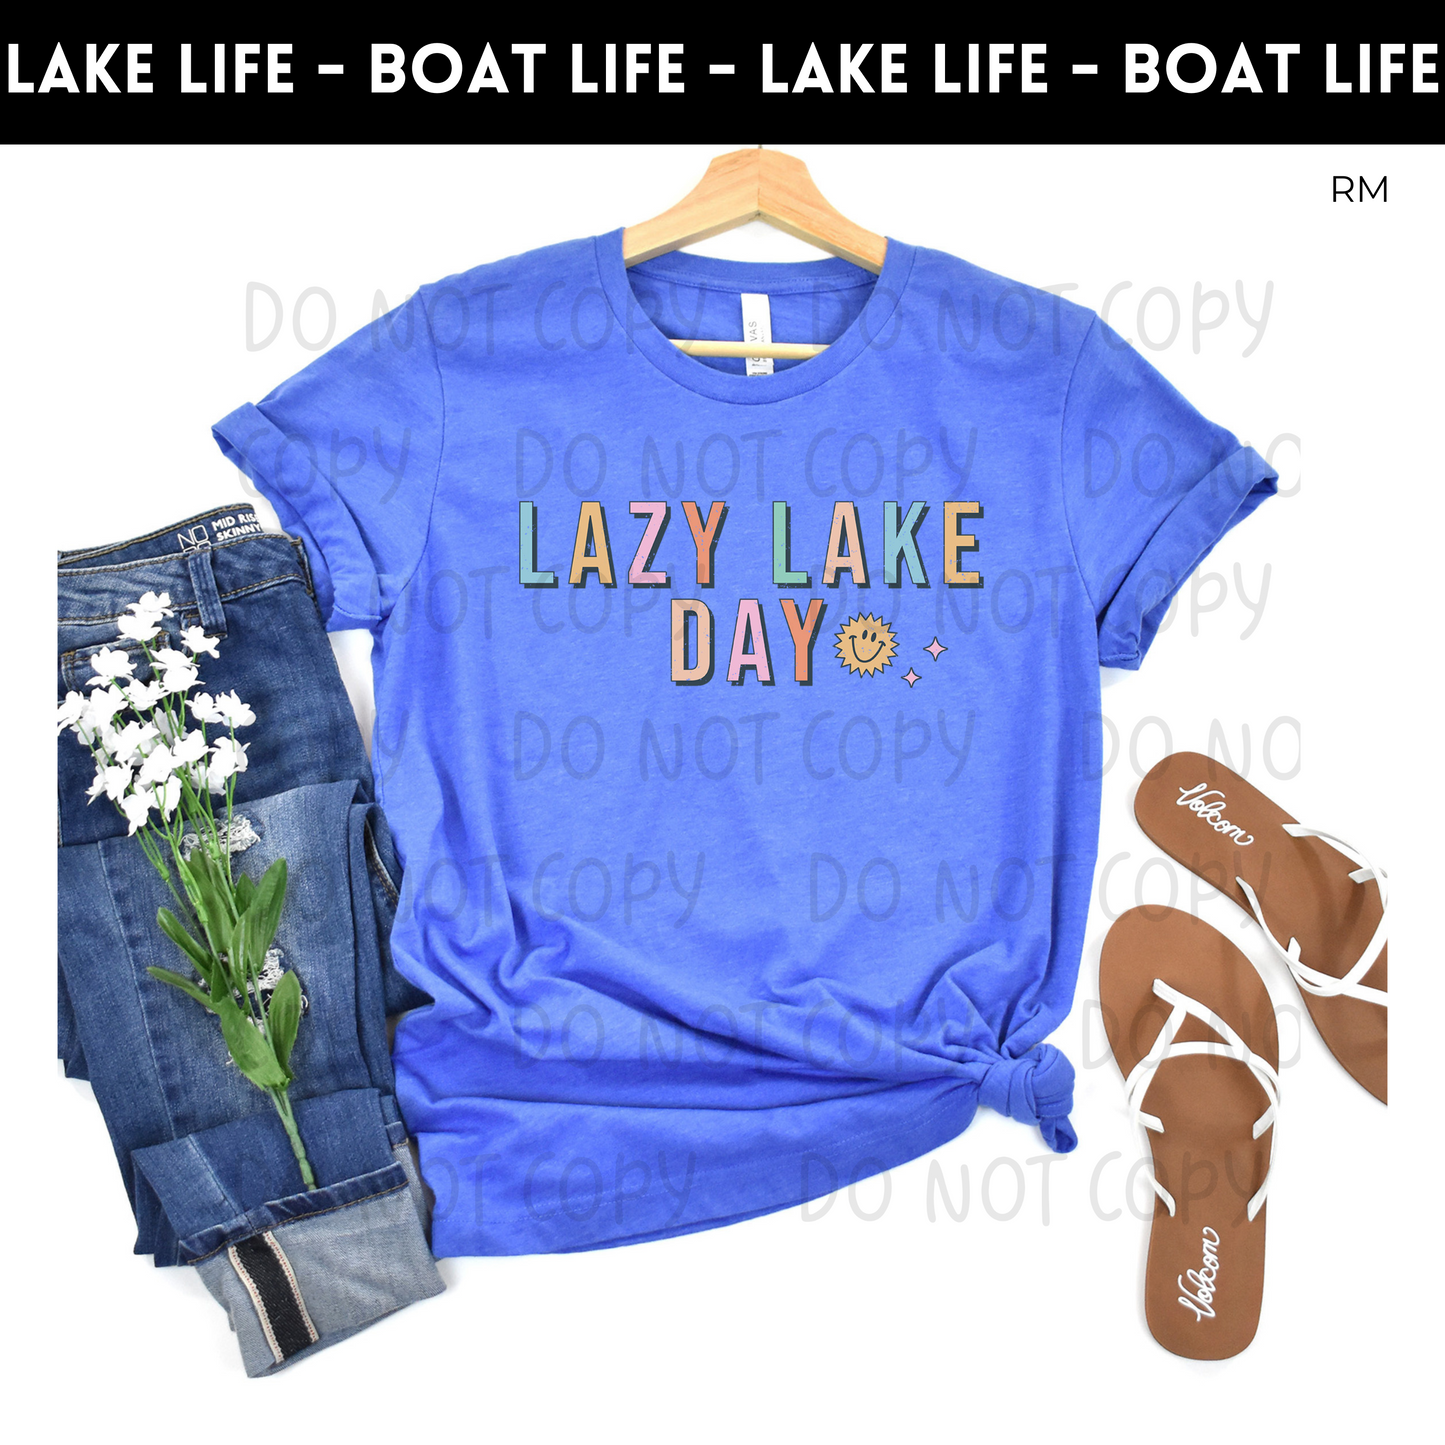 Lazy Lake Day Adult Shirt- Lake Life 40